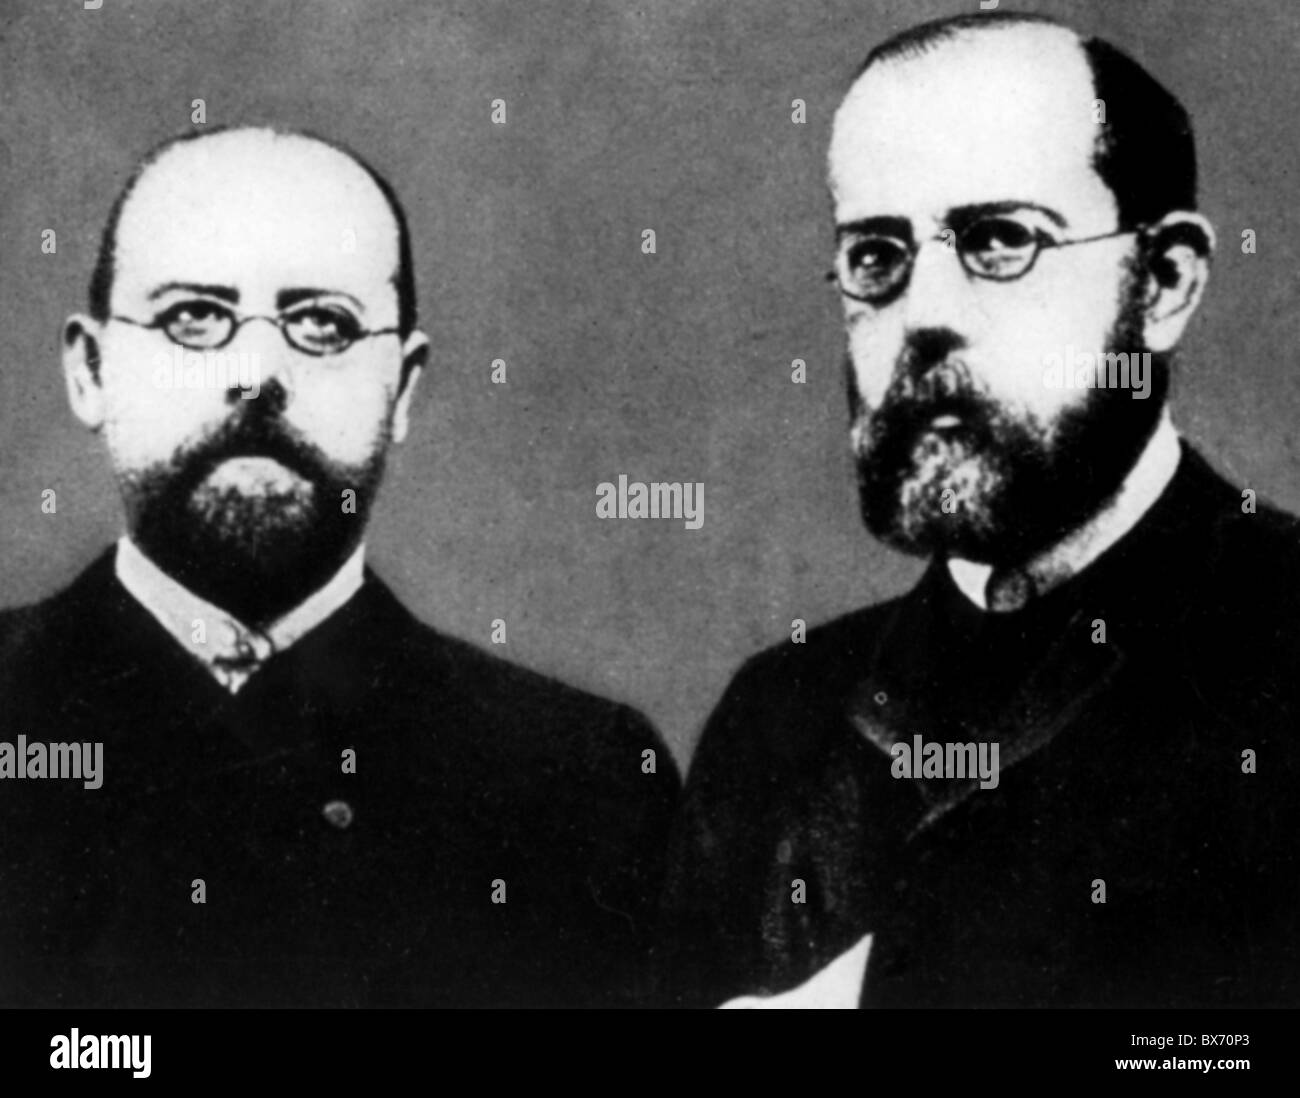 Koch, Robert, 11.12.1843 - 27. 5.1910, medico tedesco, con collega presso l'Ufficio sanitario Imperiale Friedrich Loeffler (a sinistra), Berlino, circa 1885, Foto Stock